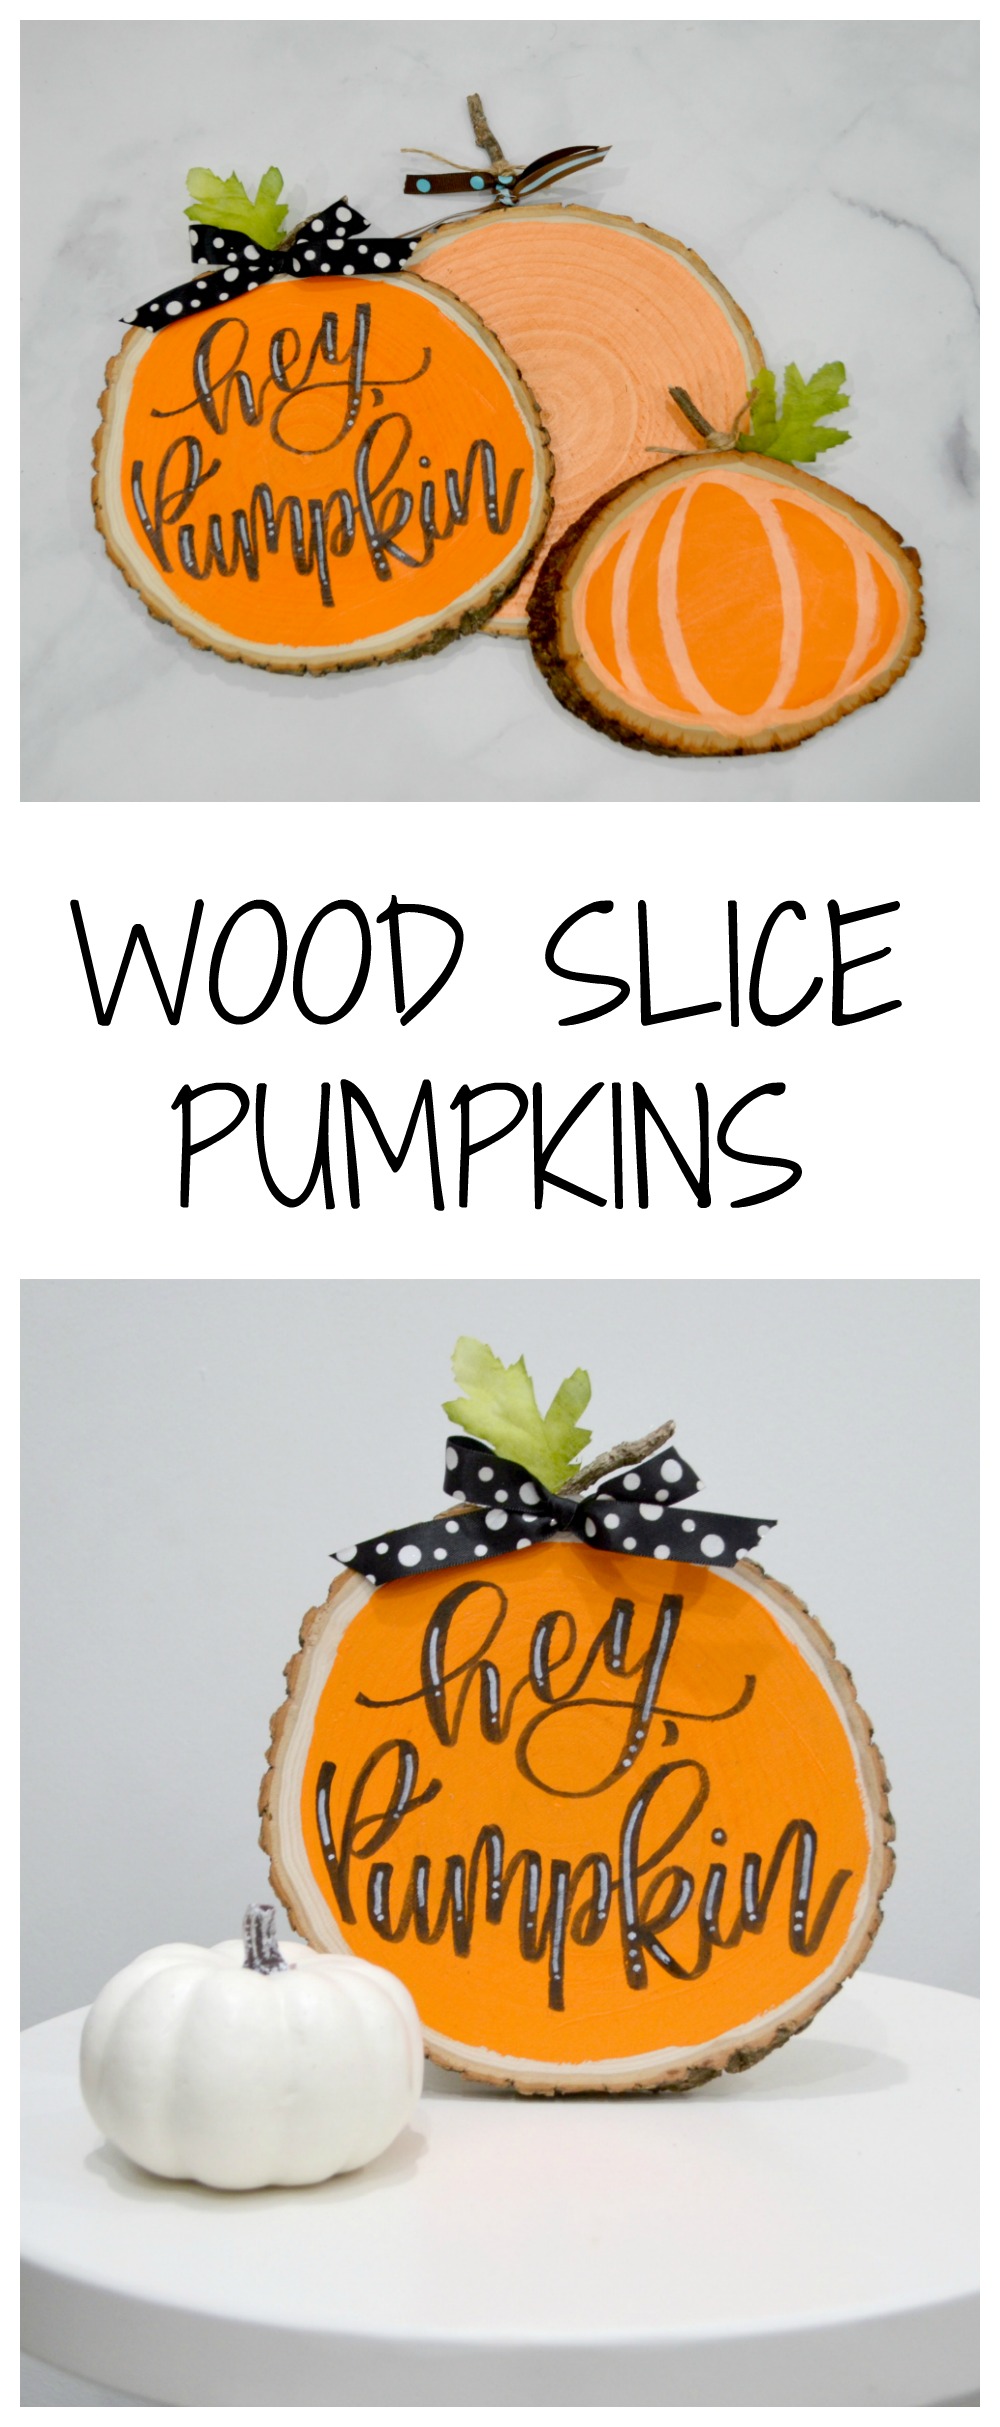 Wood Slice Pumpkins